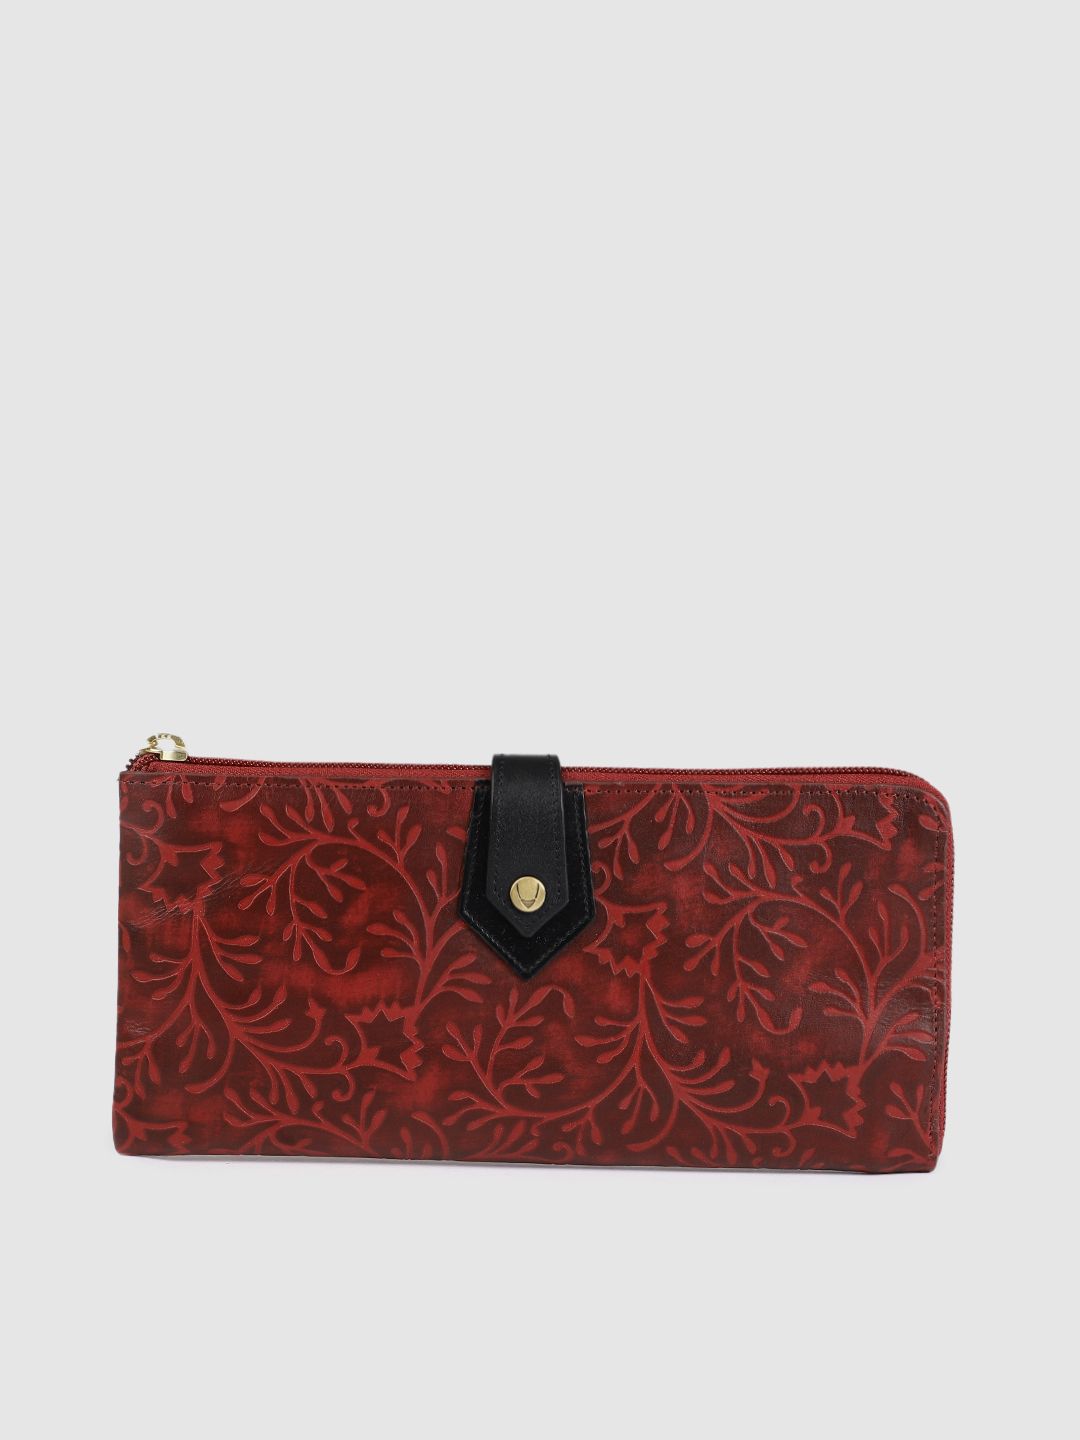 Hidesign Women Red Textured EE HONG KONG Leather Zip Around Wallet Price in India